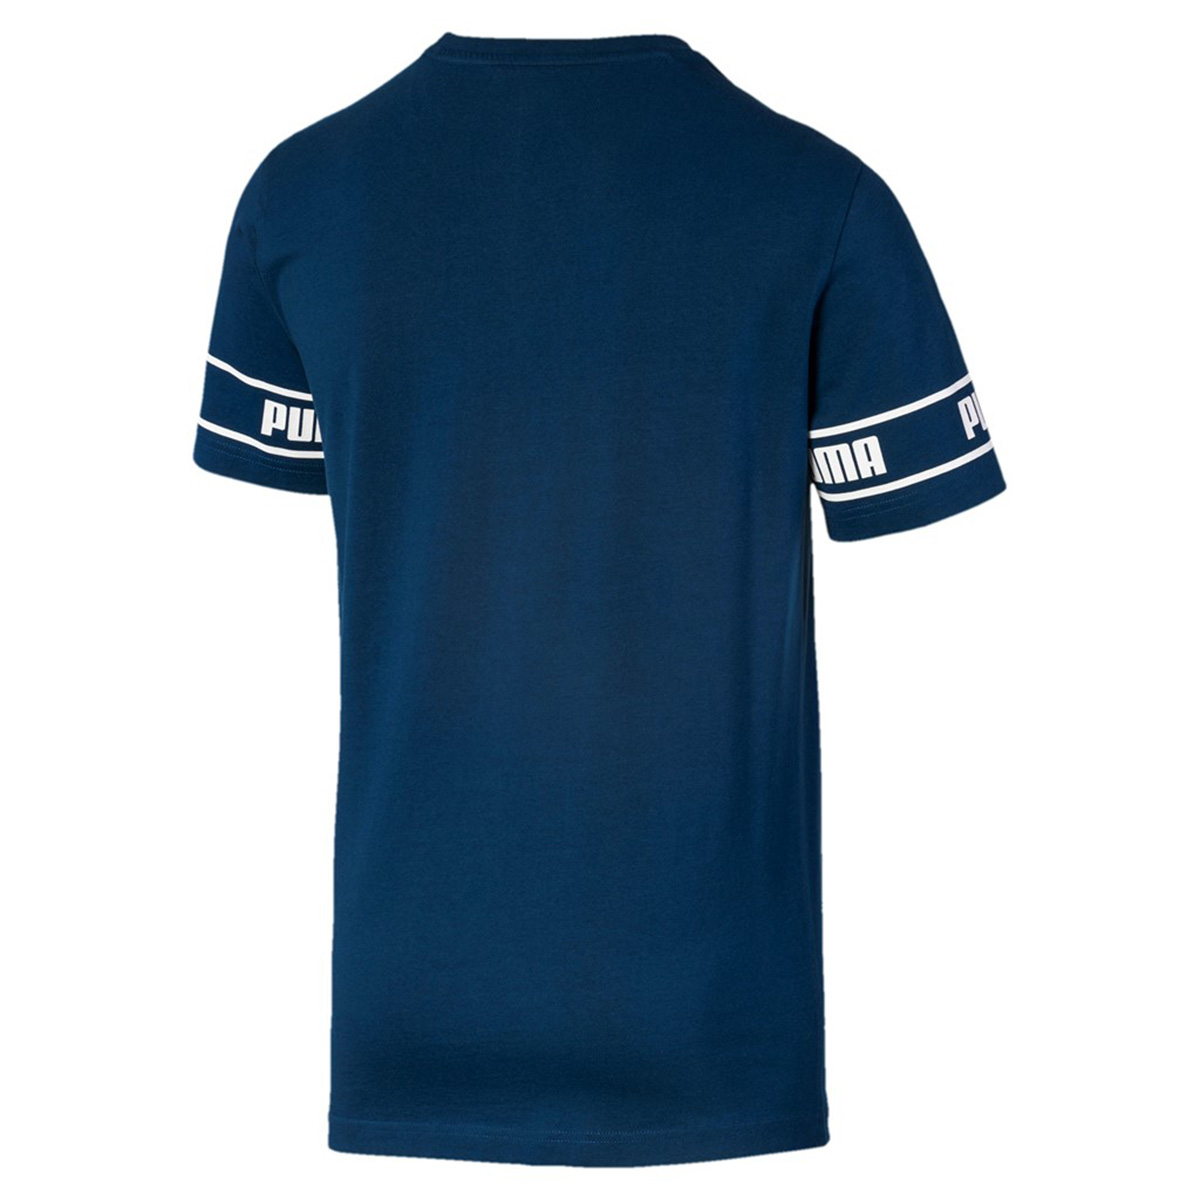 PUMA Herren Amplified Big Logo Tee T-Shirt 580426 01